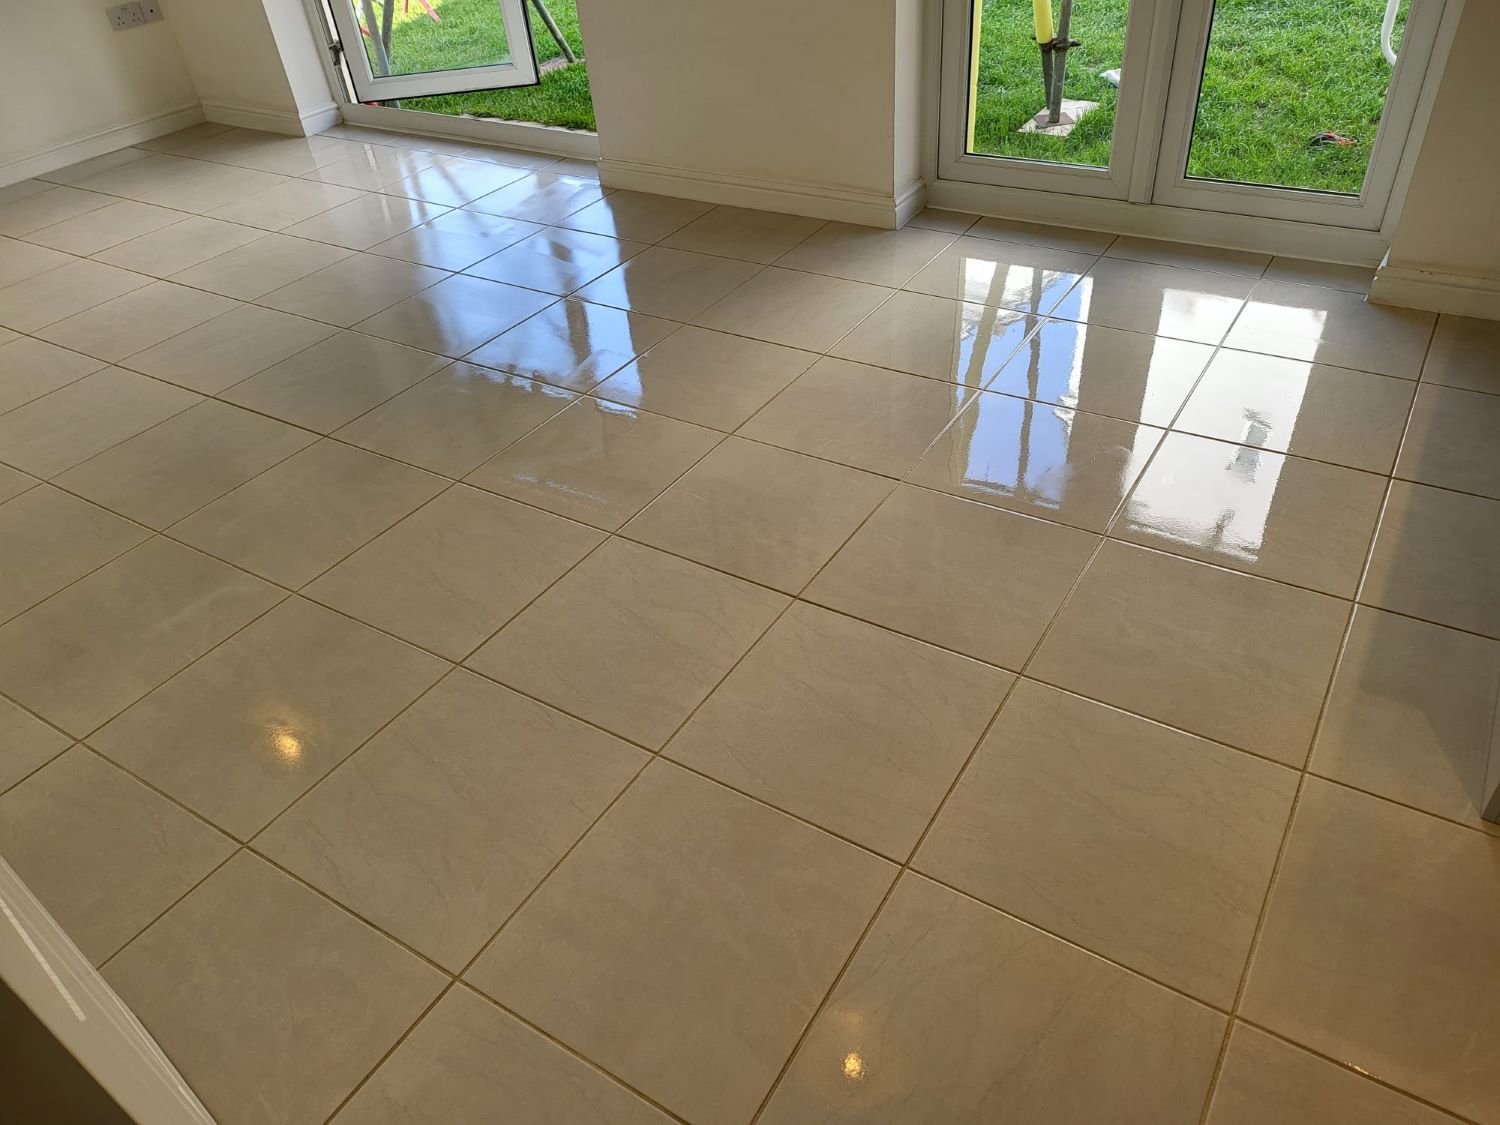 Domestic tiled floor cleaned